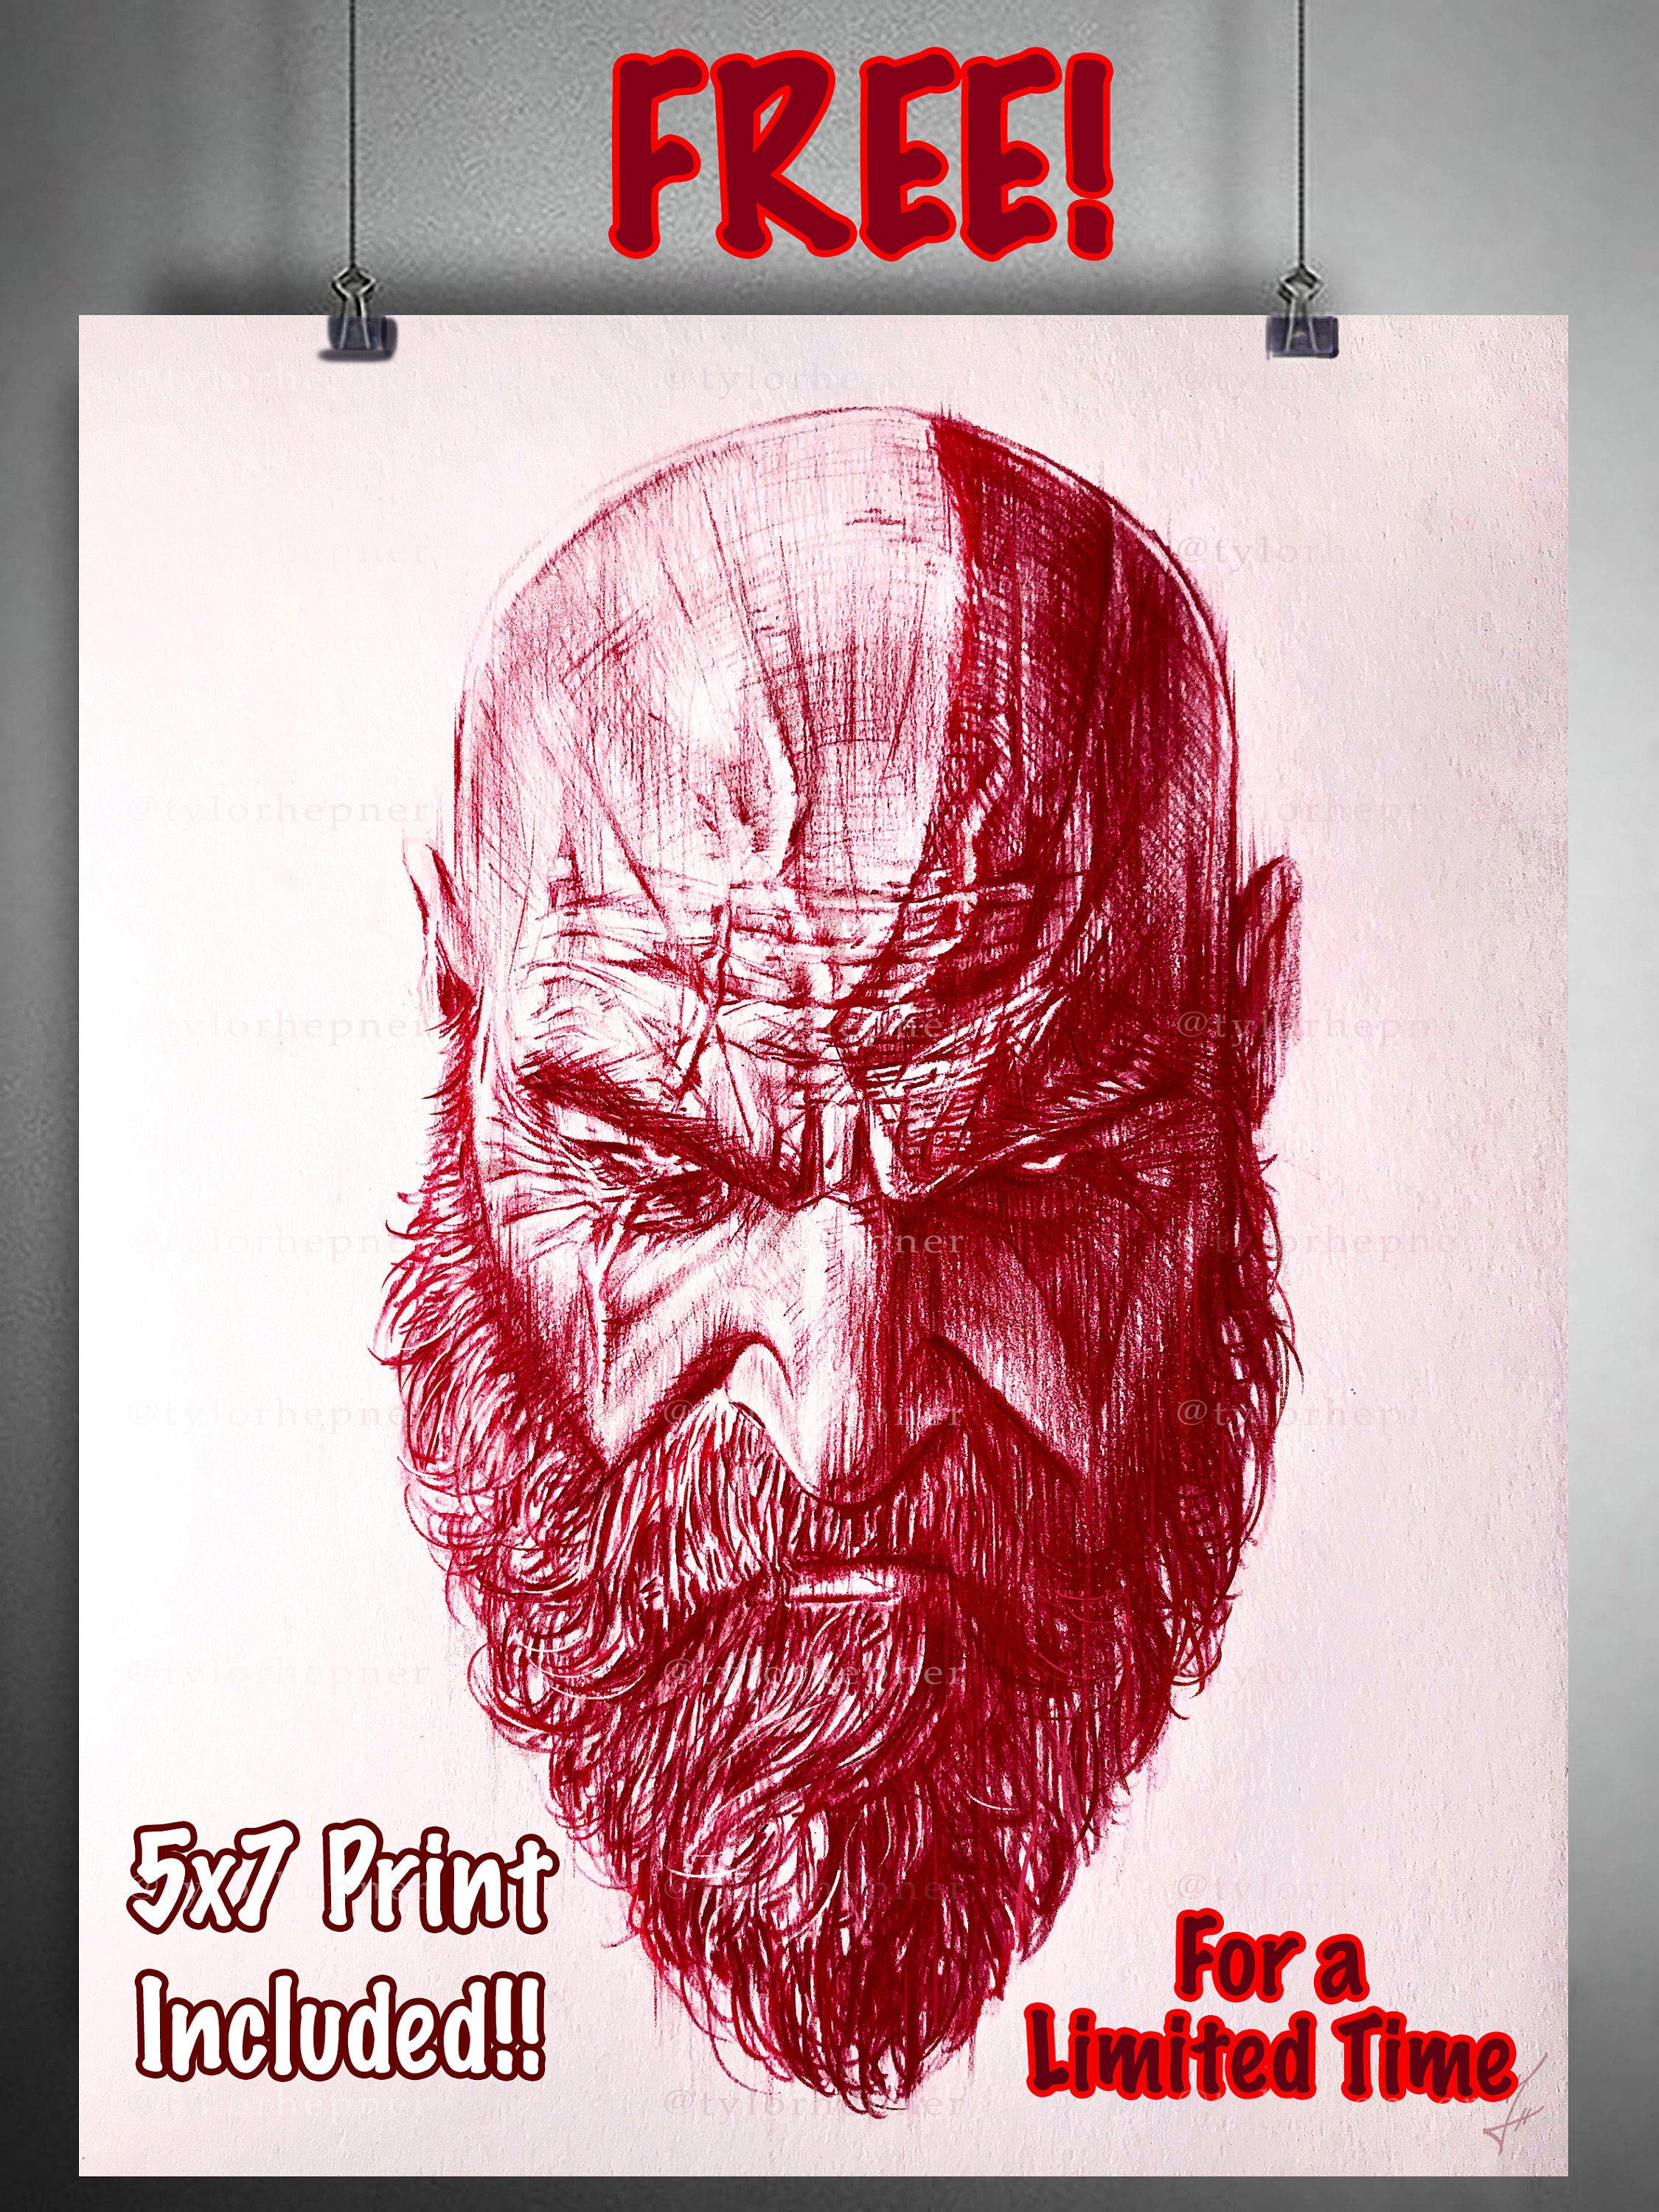 God Of War Ragnarök BTS Video Details The Creation Of Kratos